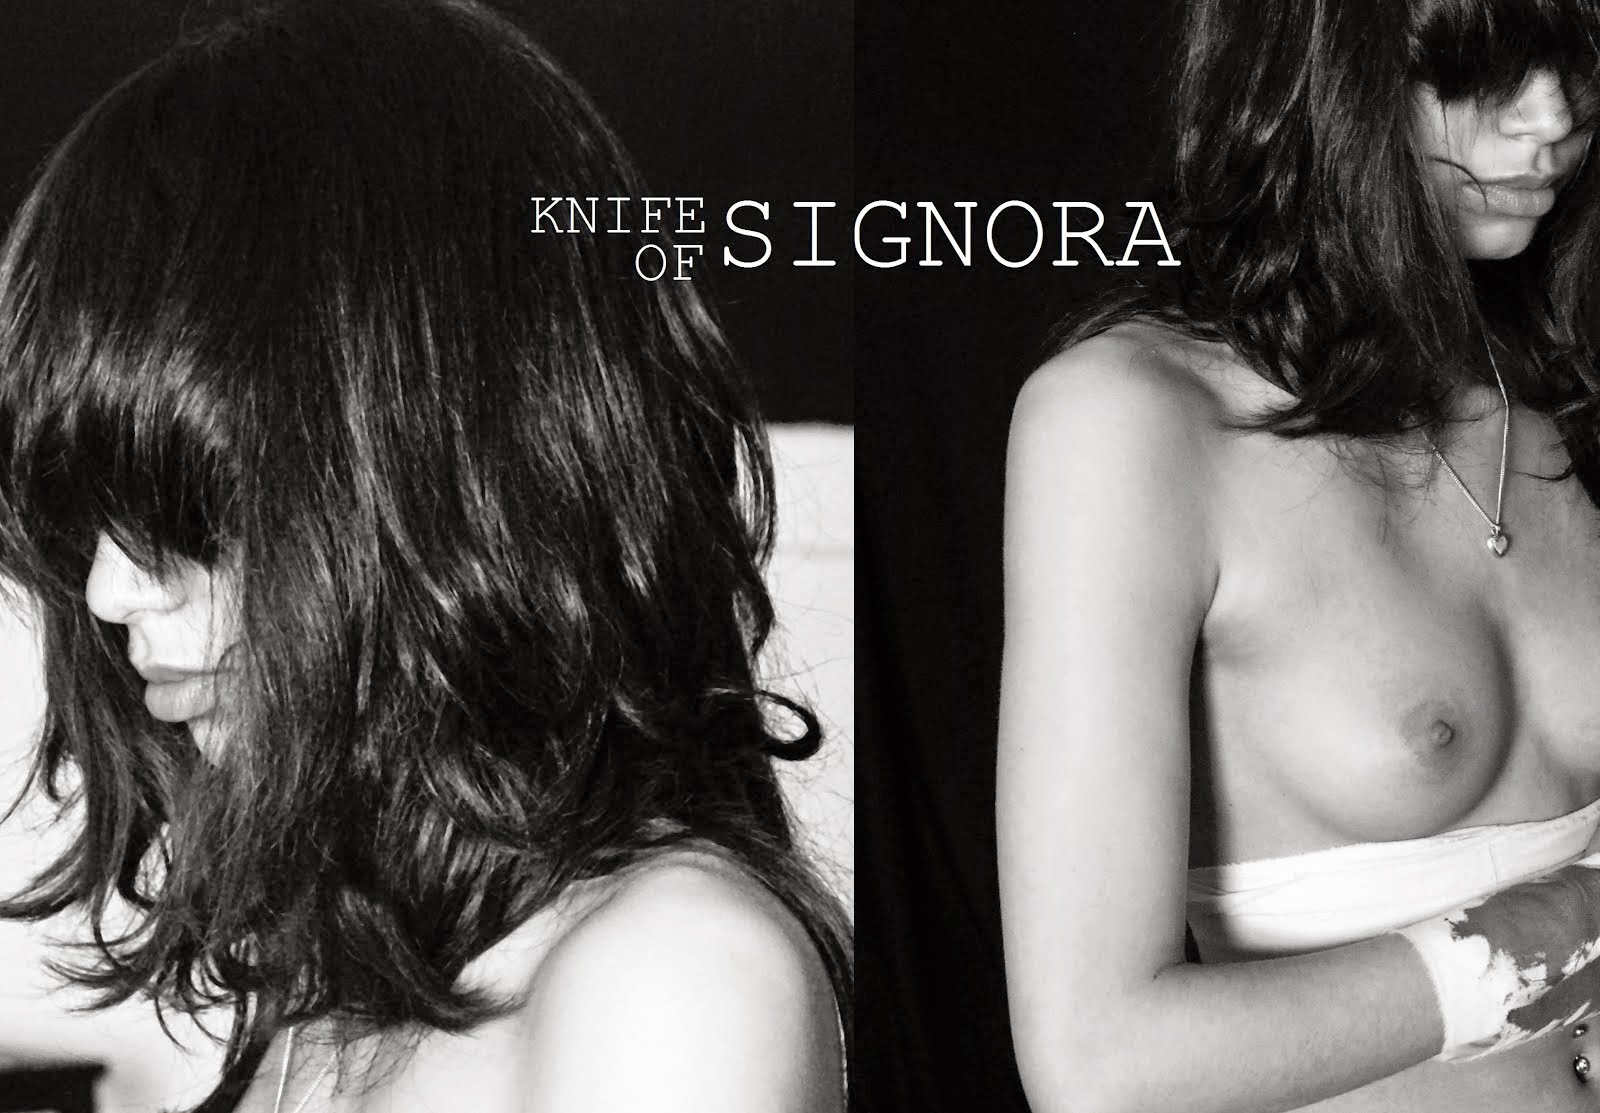 Knife of Signora